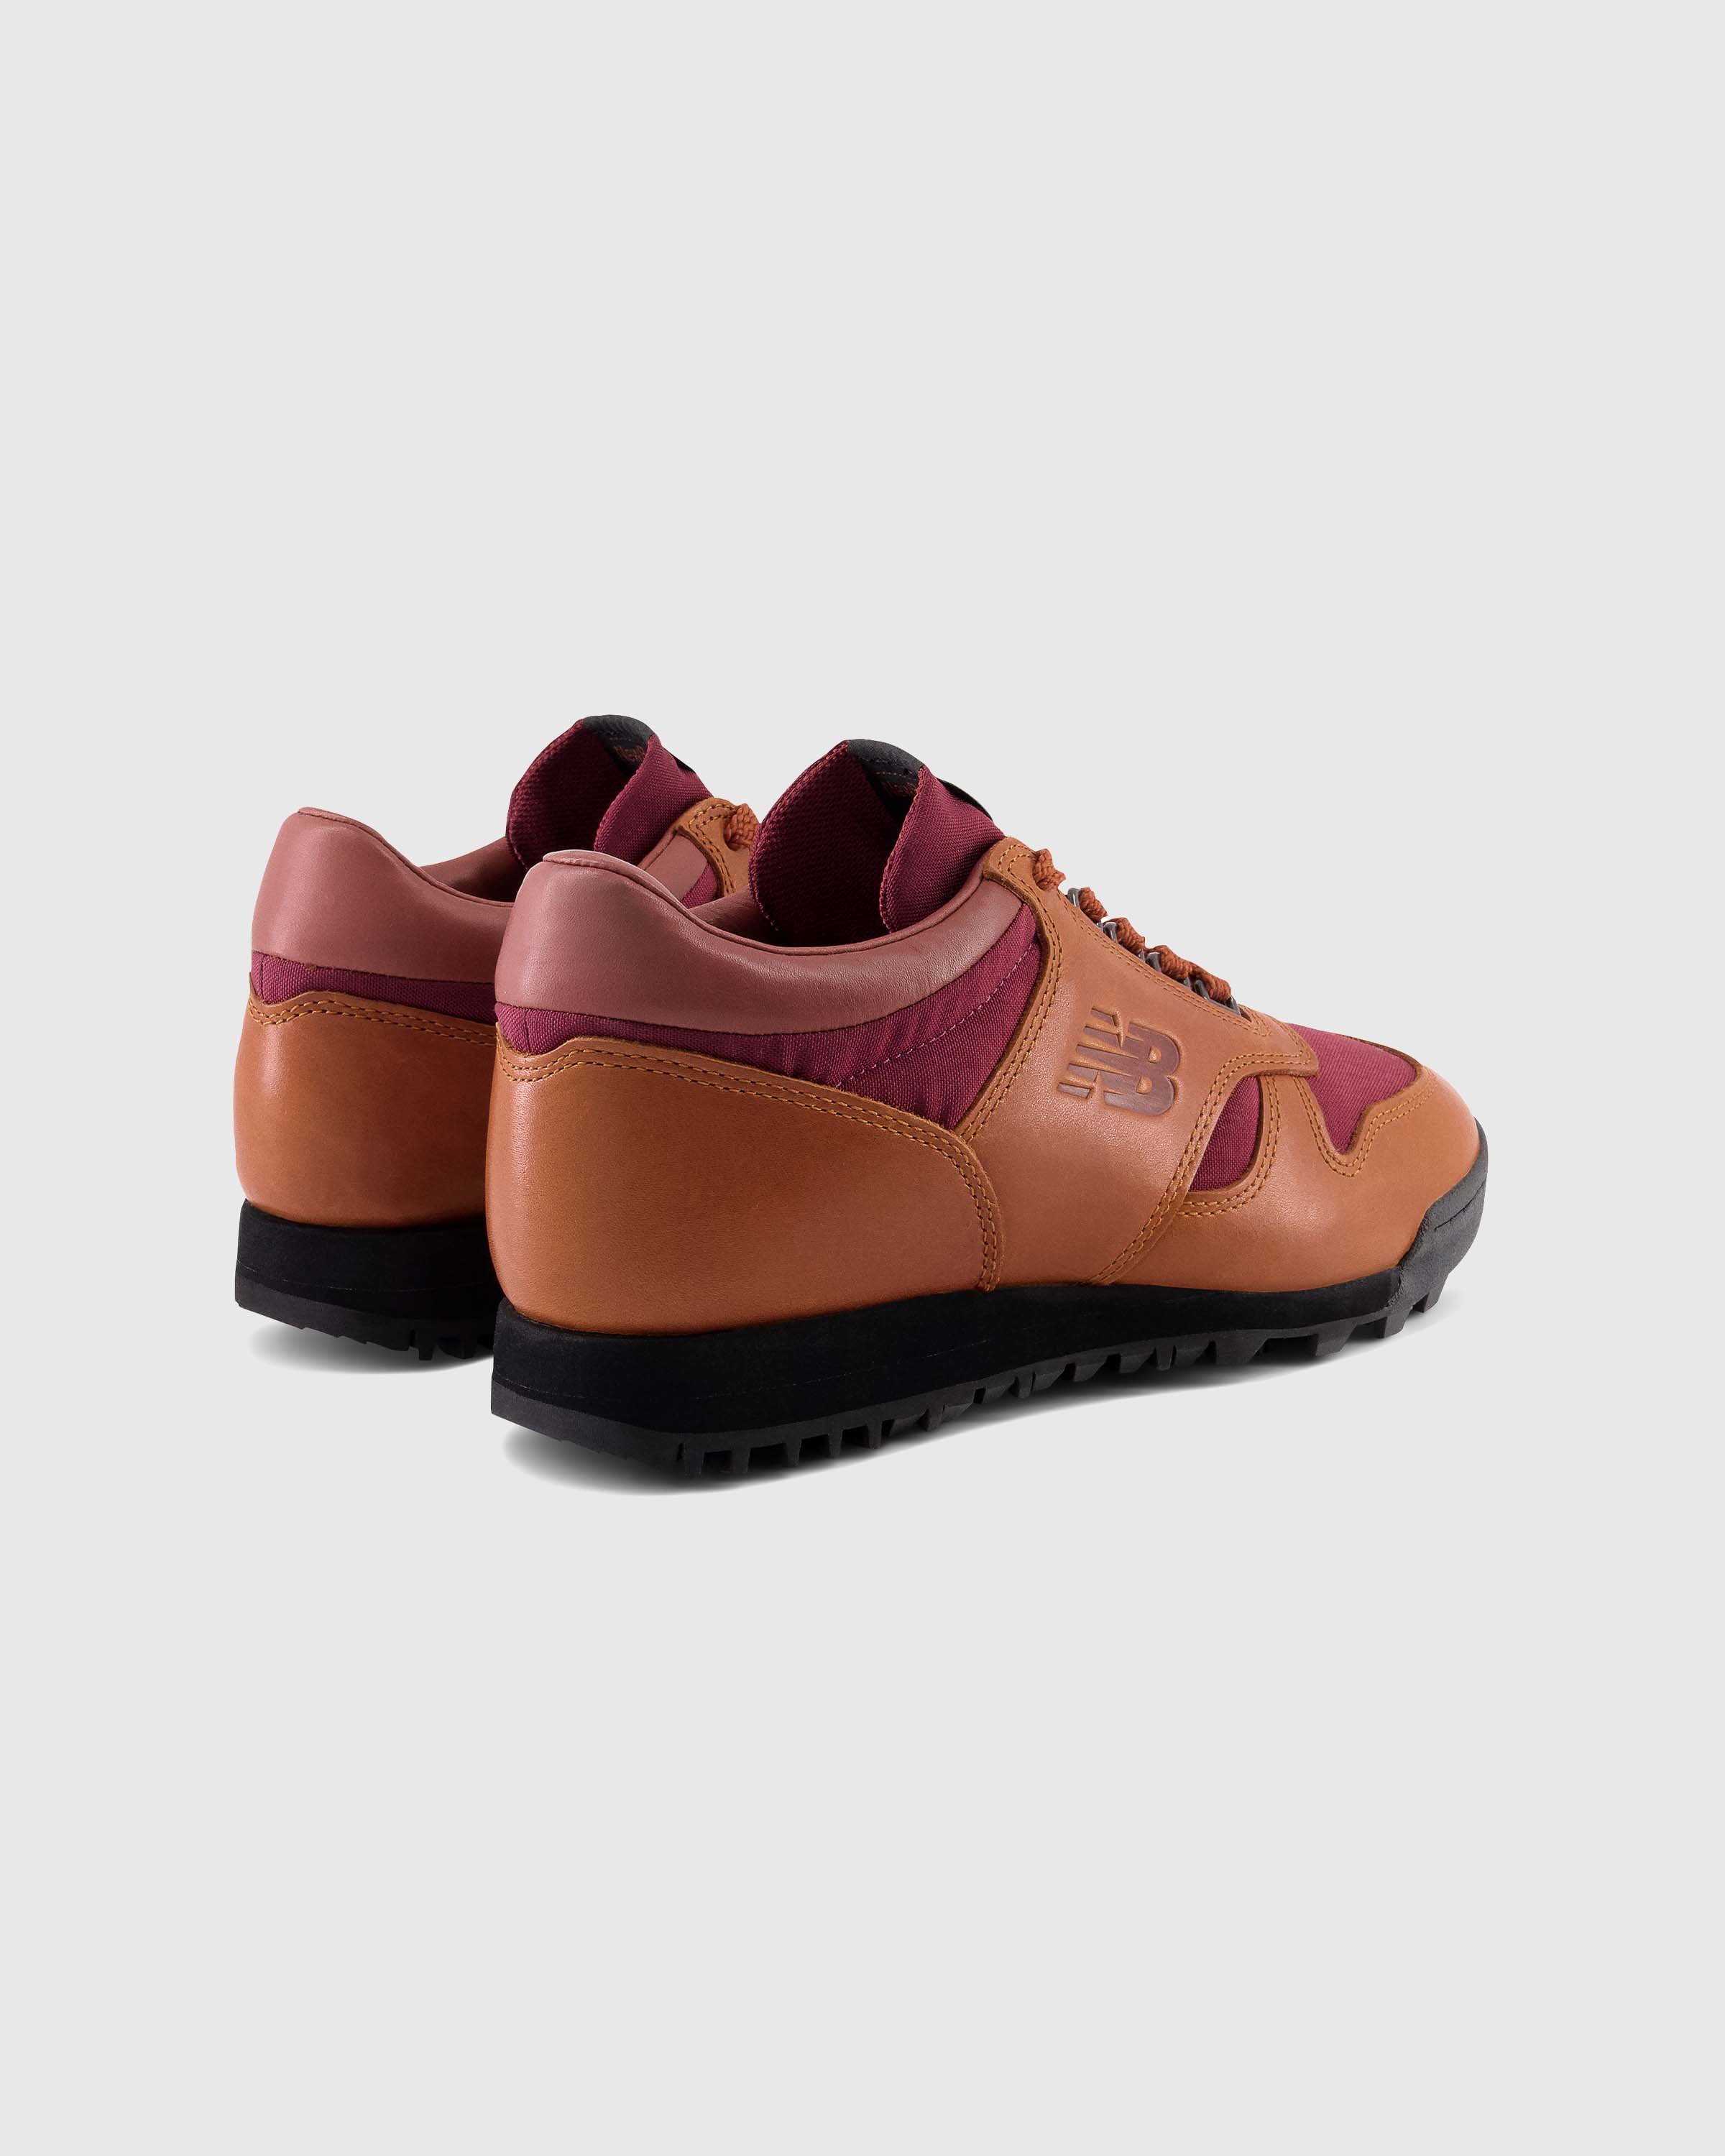 New Balance - UALGSOG Tan - Footwear - Brown - Image 4